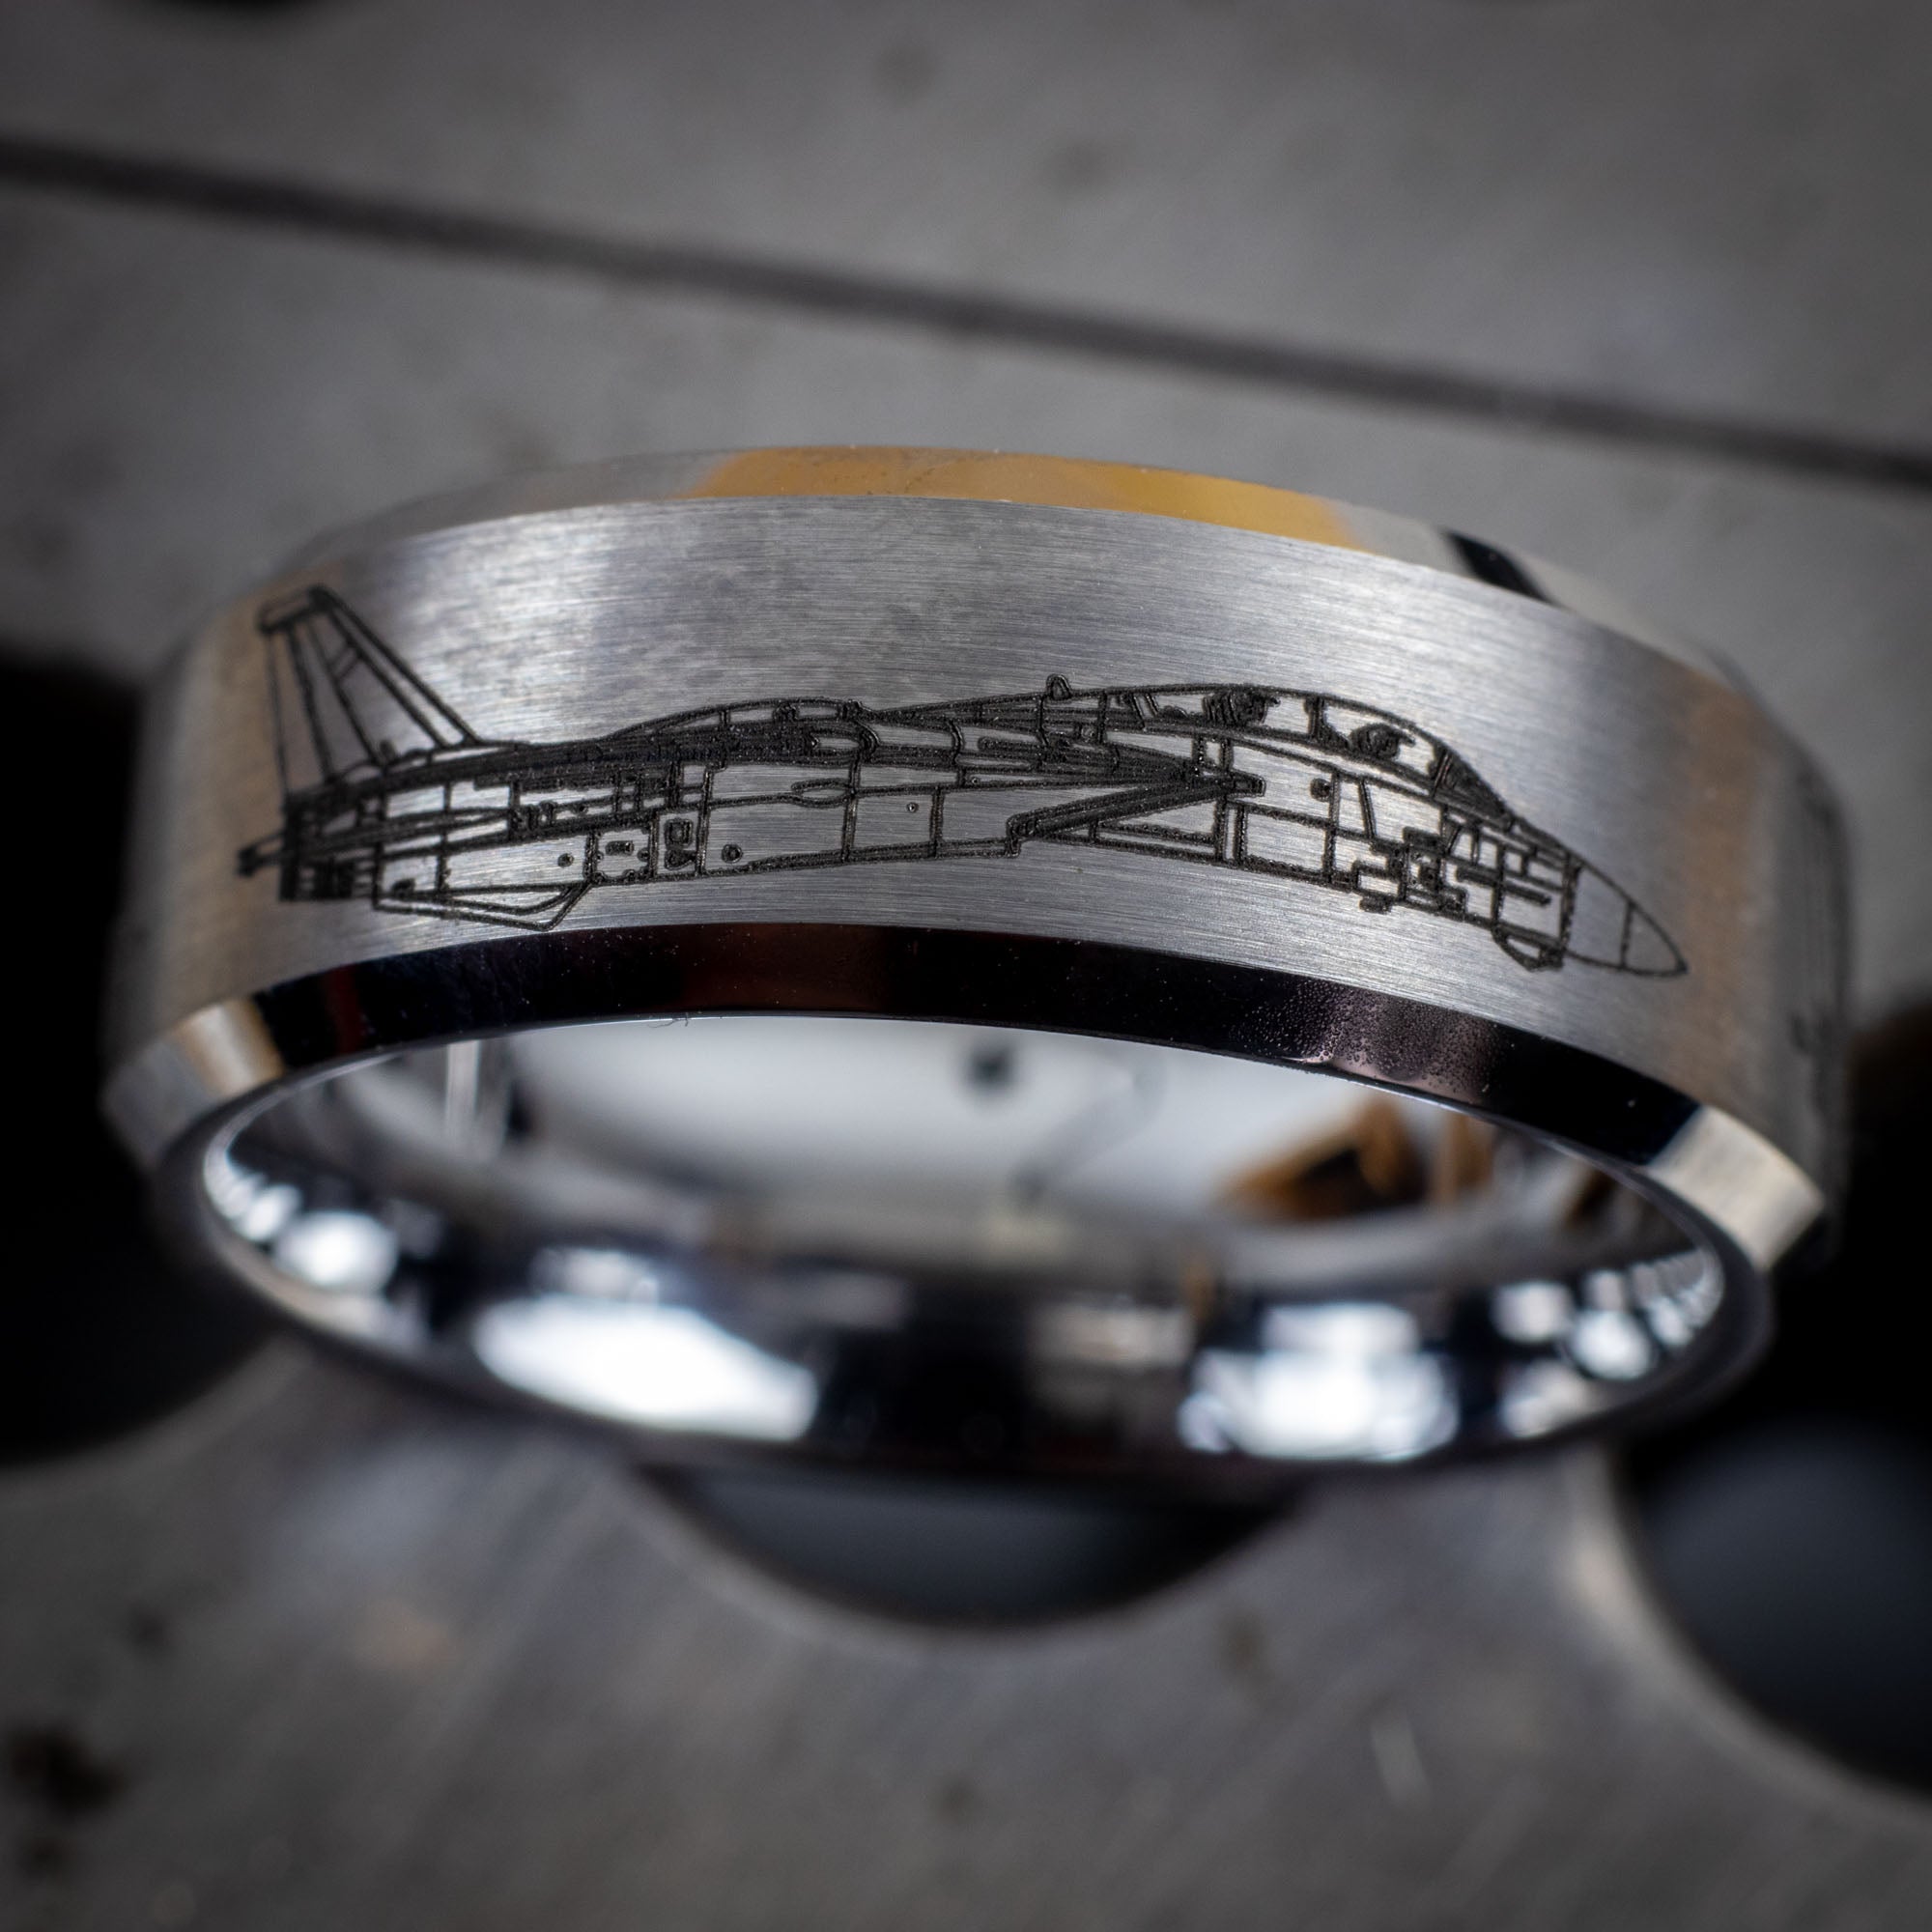 Beveled Tungsten Engraved F14 Tomcat Ring